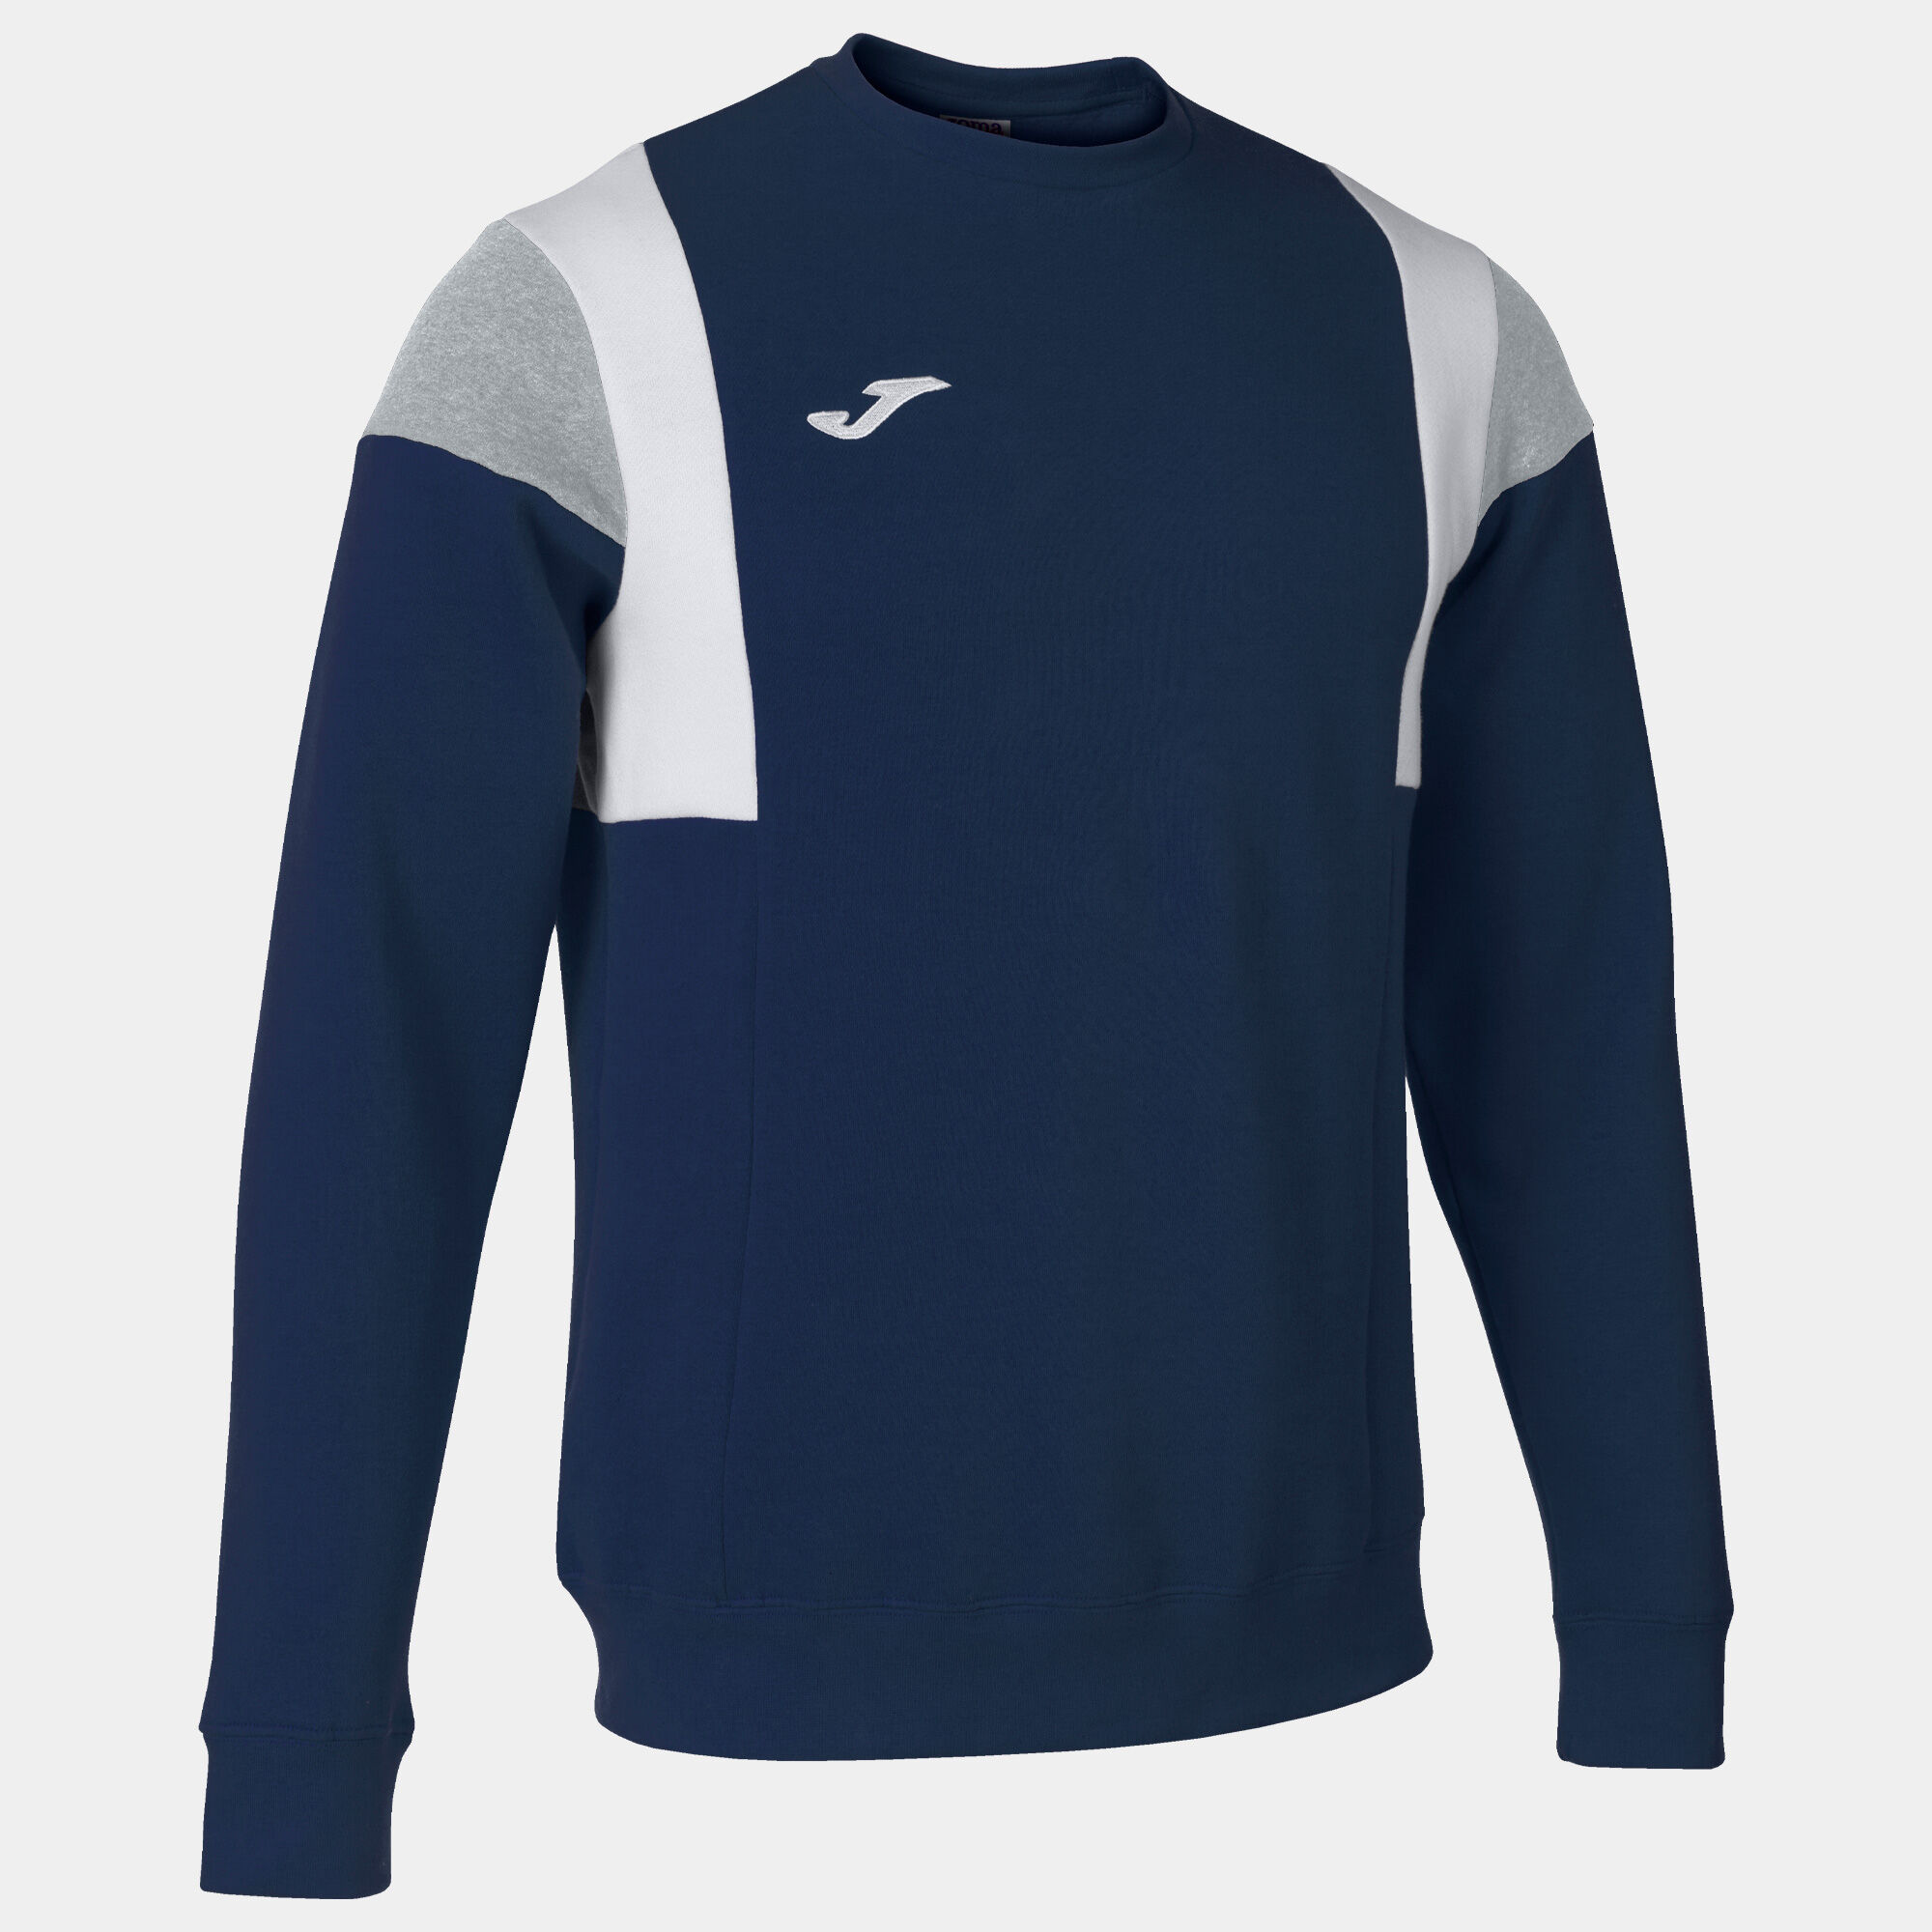 Sweat-shirt homme Confort III bleu marine